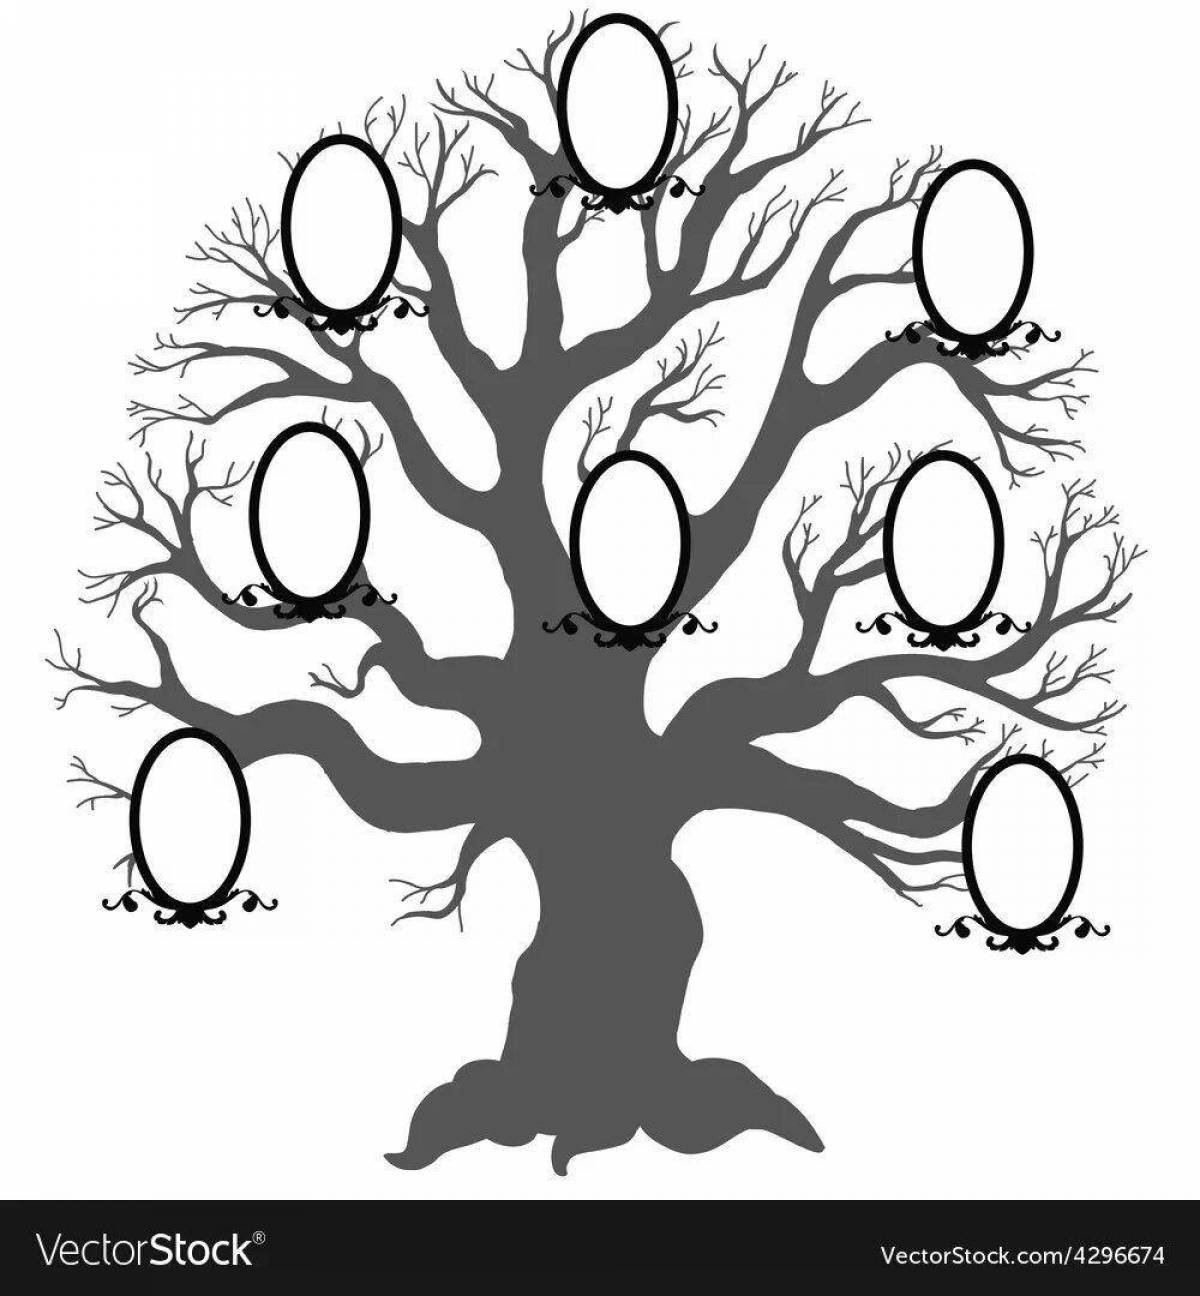 Humorous family tree template